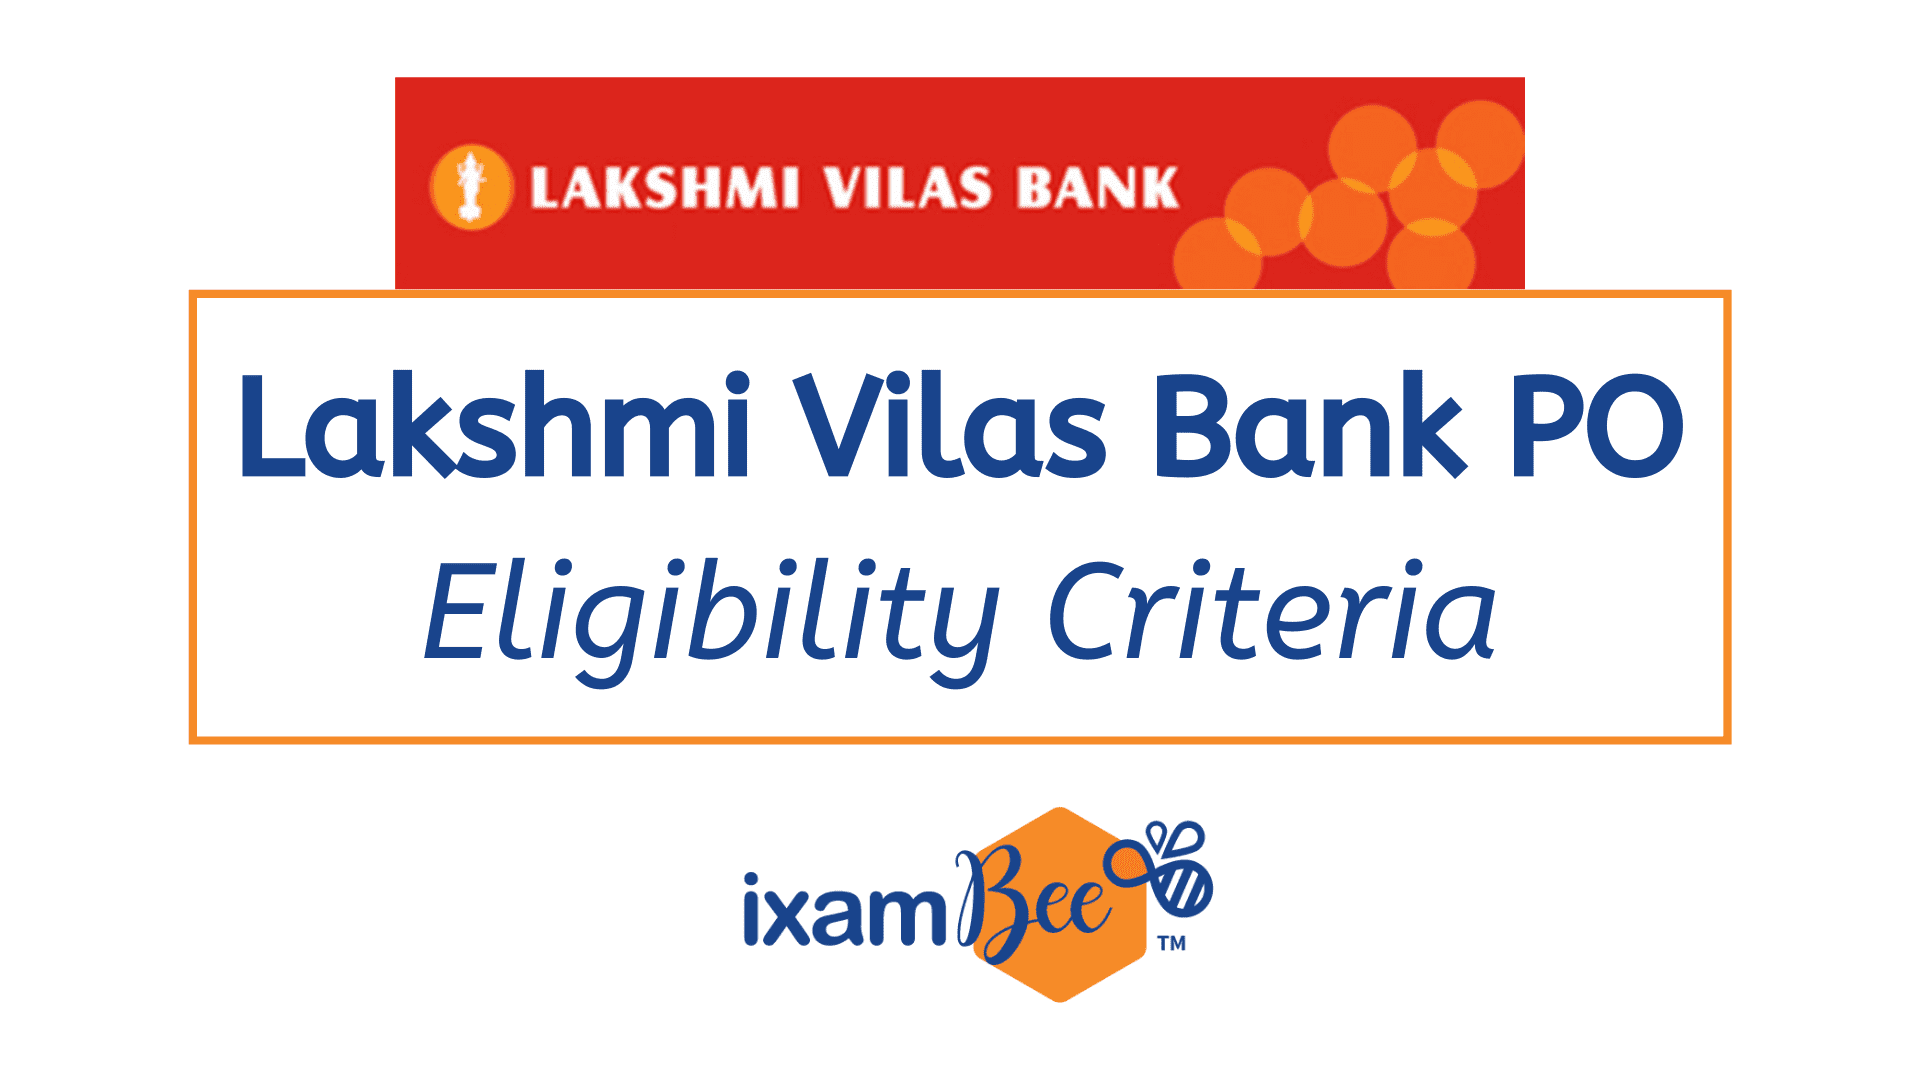 Lakshmi Vilas Bank PO Eligibility Criteria